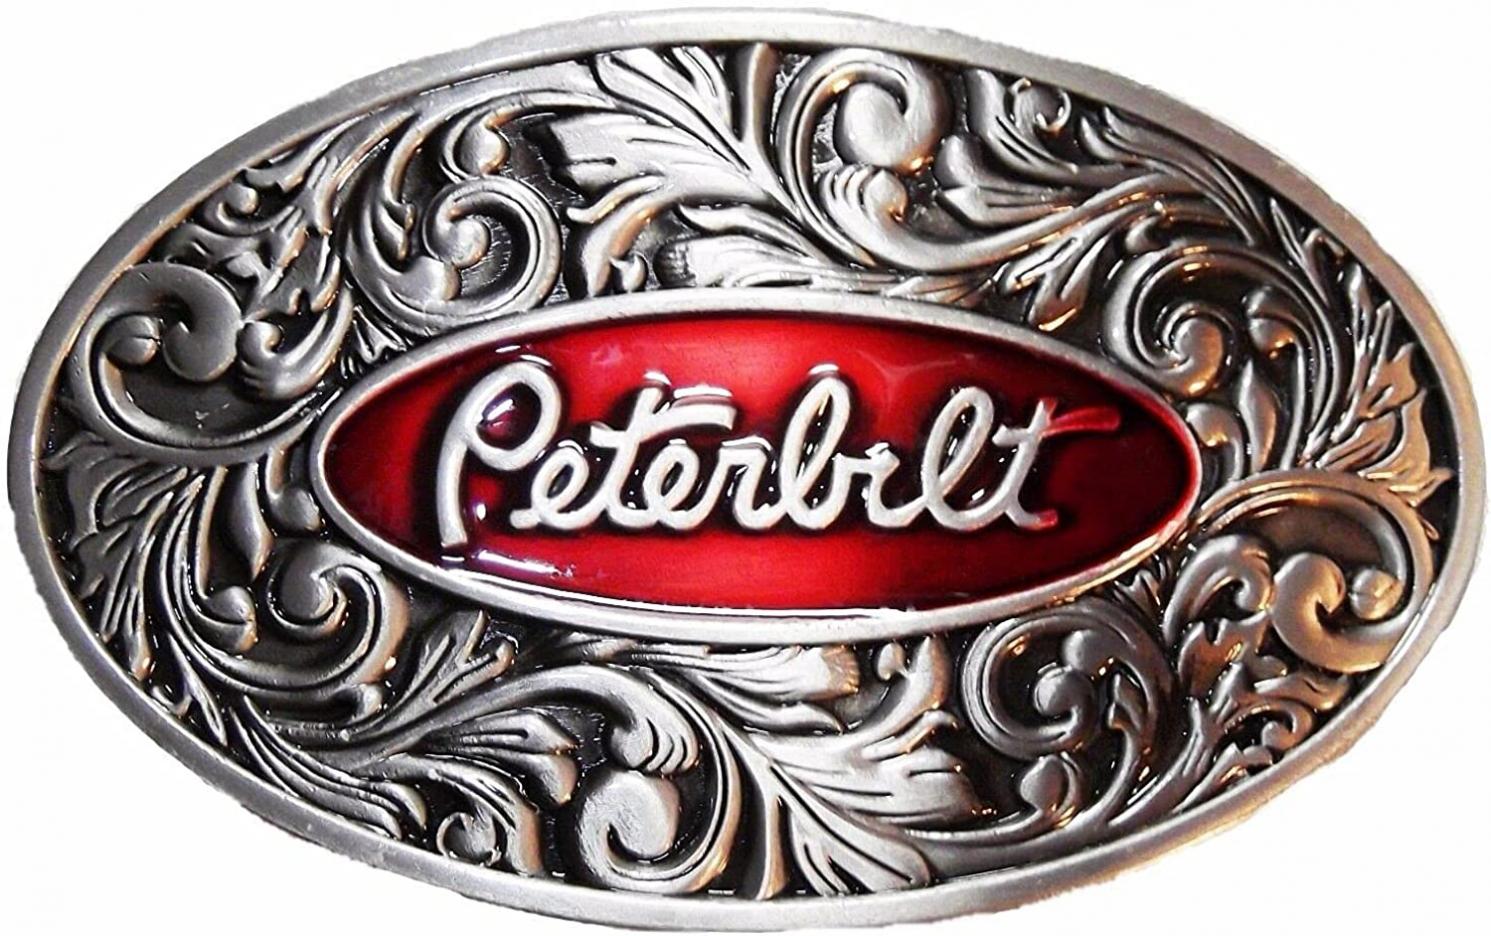 TotalShop Peterbilt Truck Belt Buckle, Red Silver